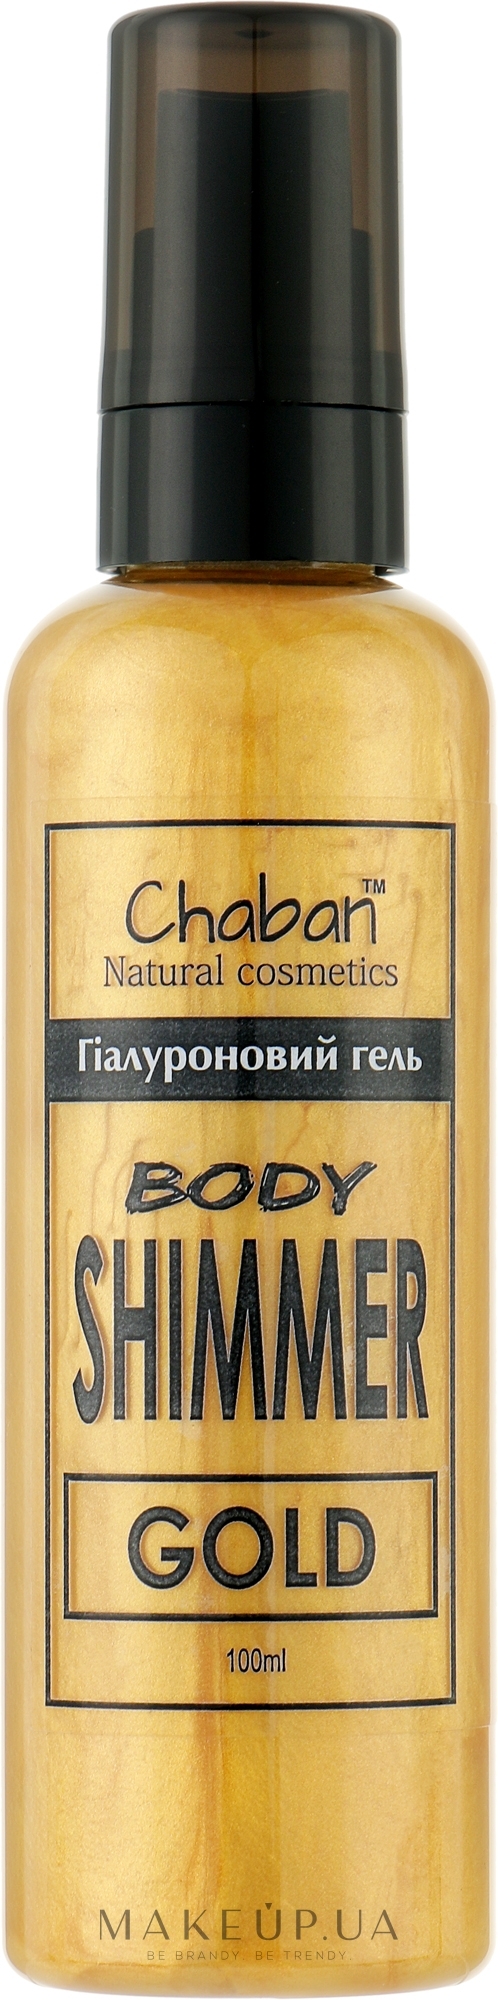 Гиалуроновый гель-шимер для тела - Chaban Gold Body Shimmer — фото 100ml